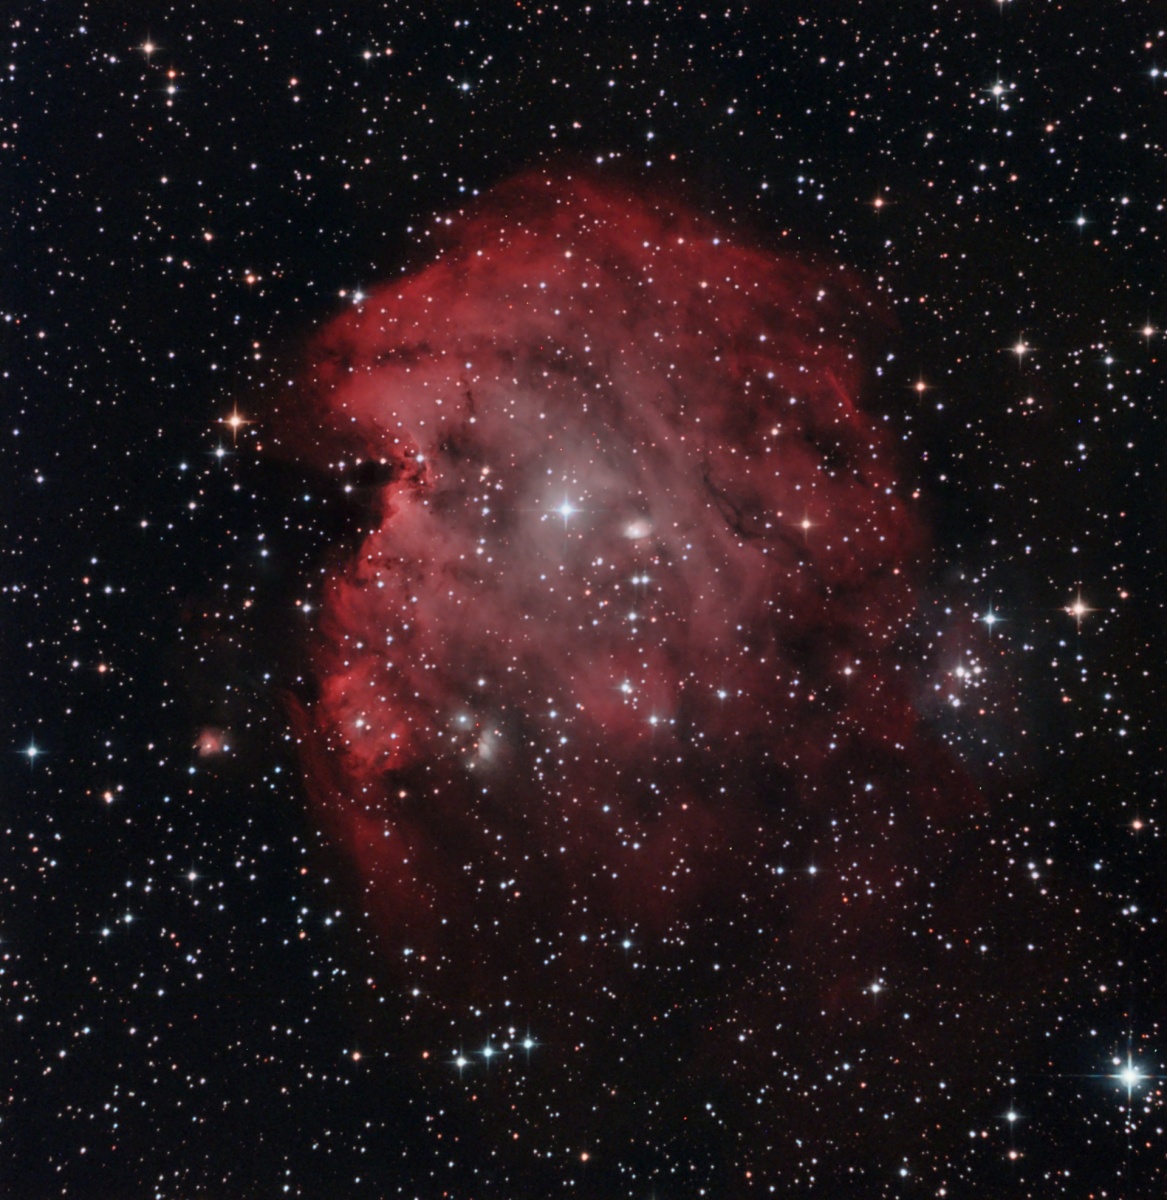 Monkey Head Nebula

Skywatcher Quattro 10" CF
QHY8
2 hours 50 min in 10 minute exposures.